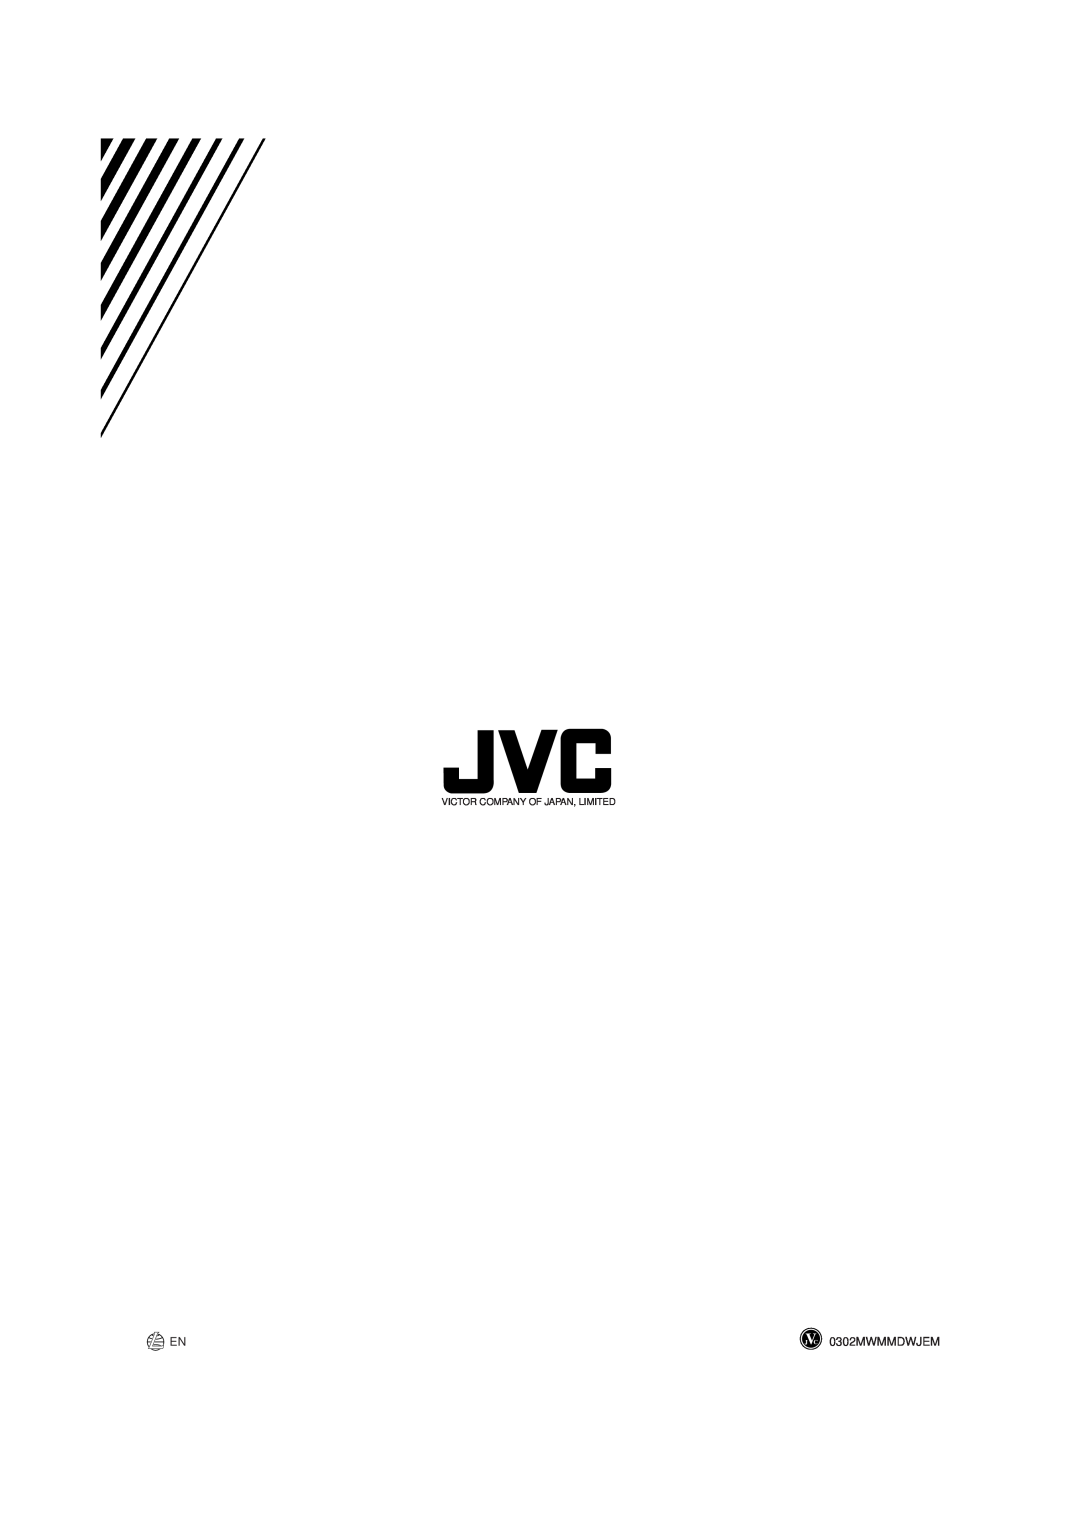 JVC GVT0077-008A manual 0302MWMMDWJEM, Victor Company Of Japan, Limited 